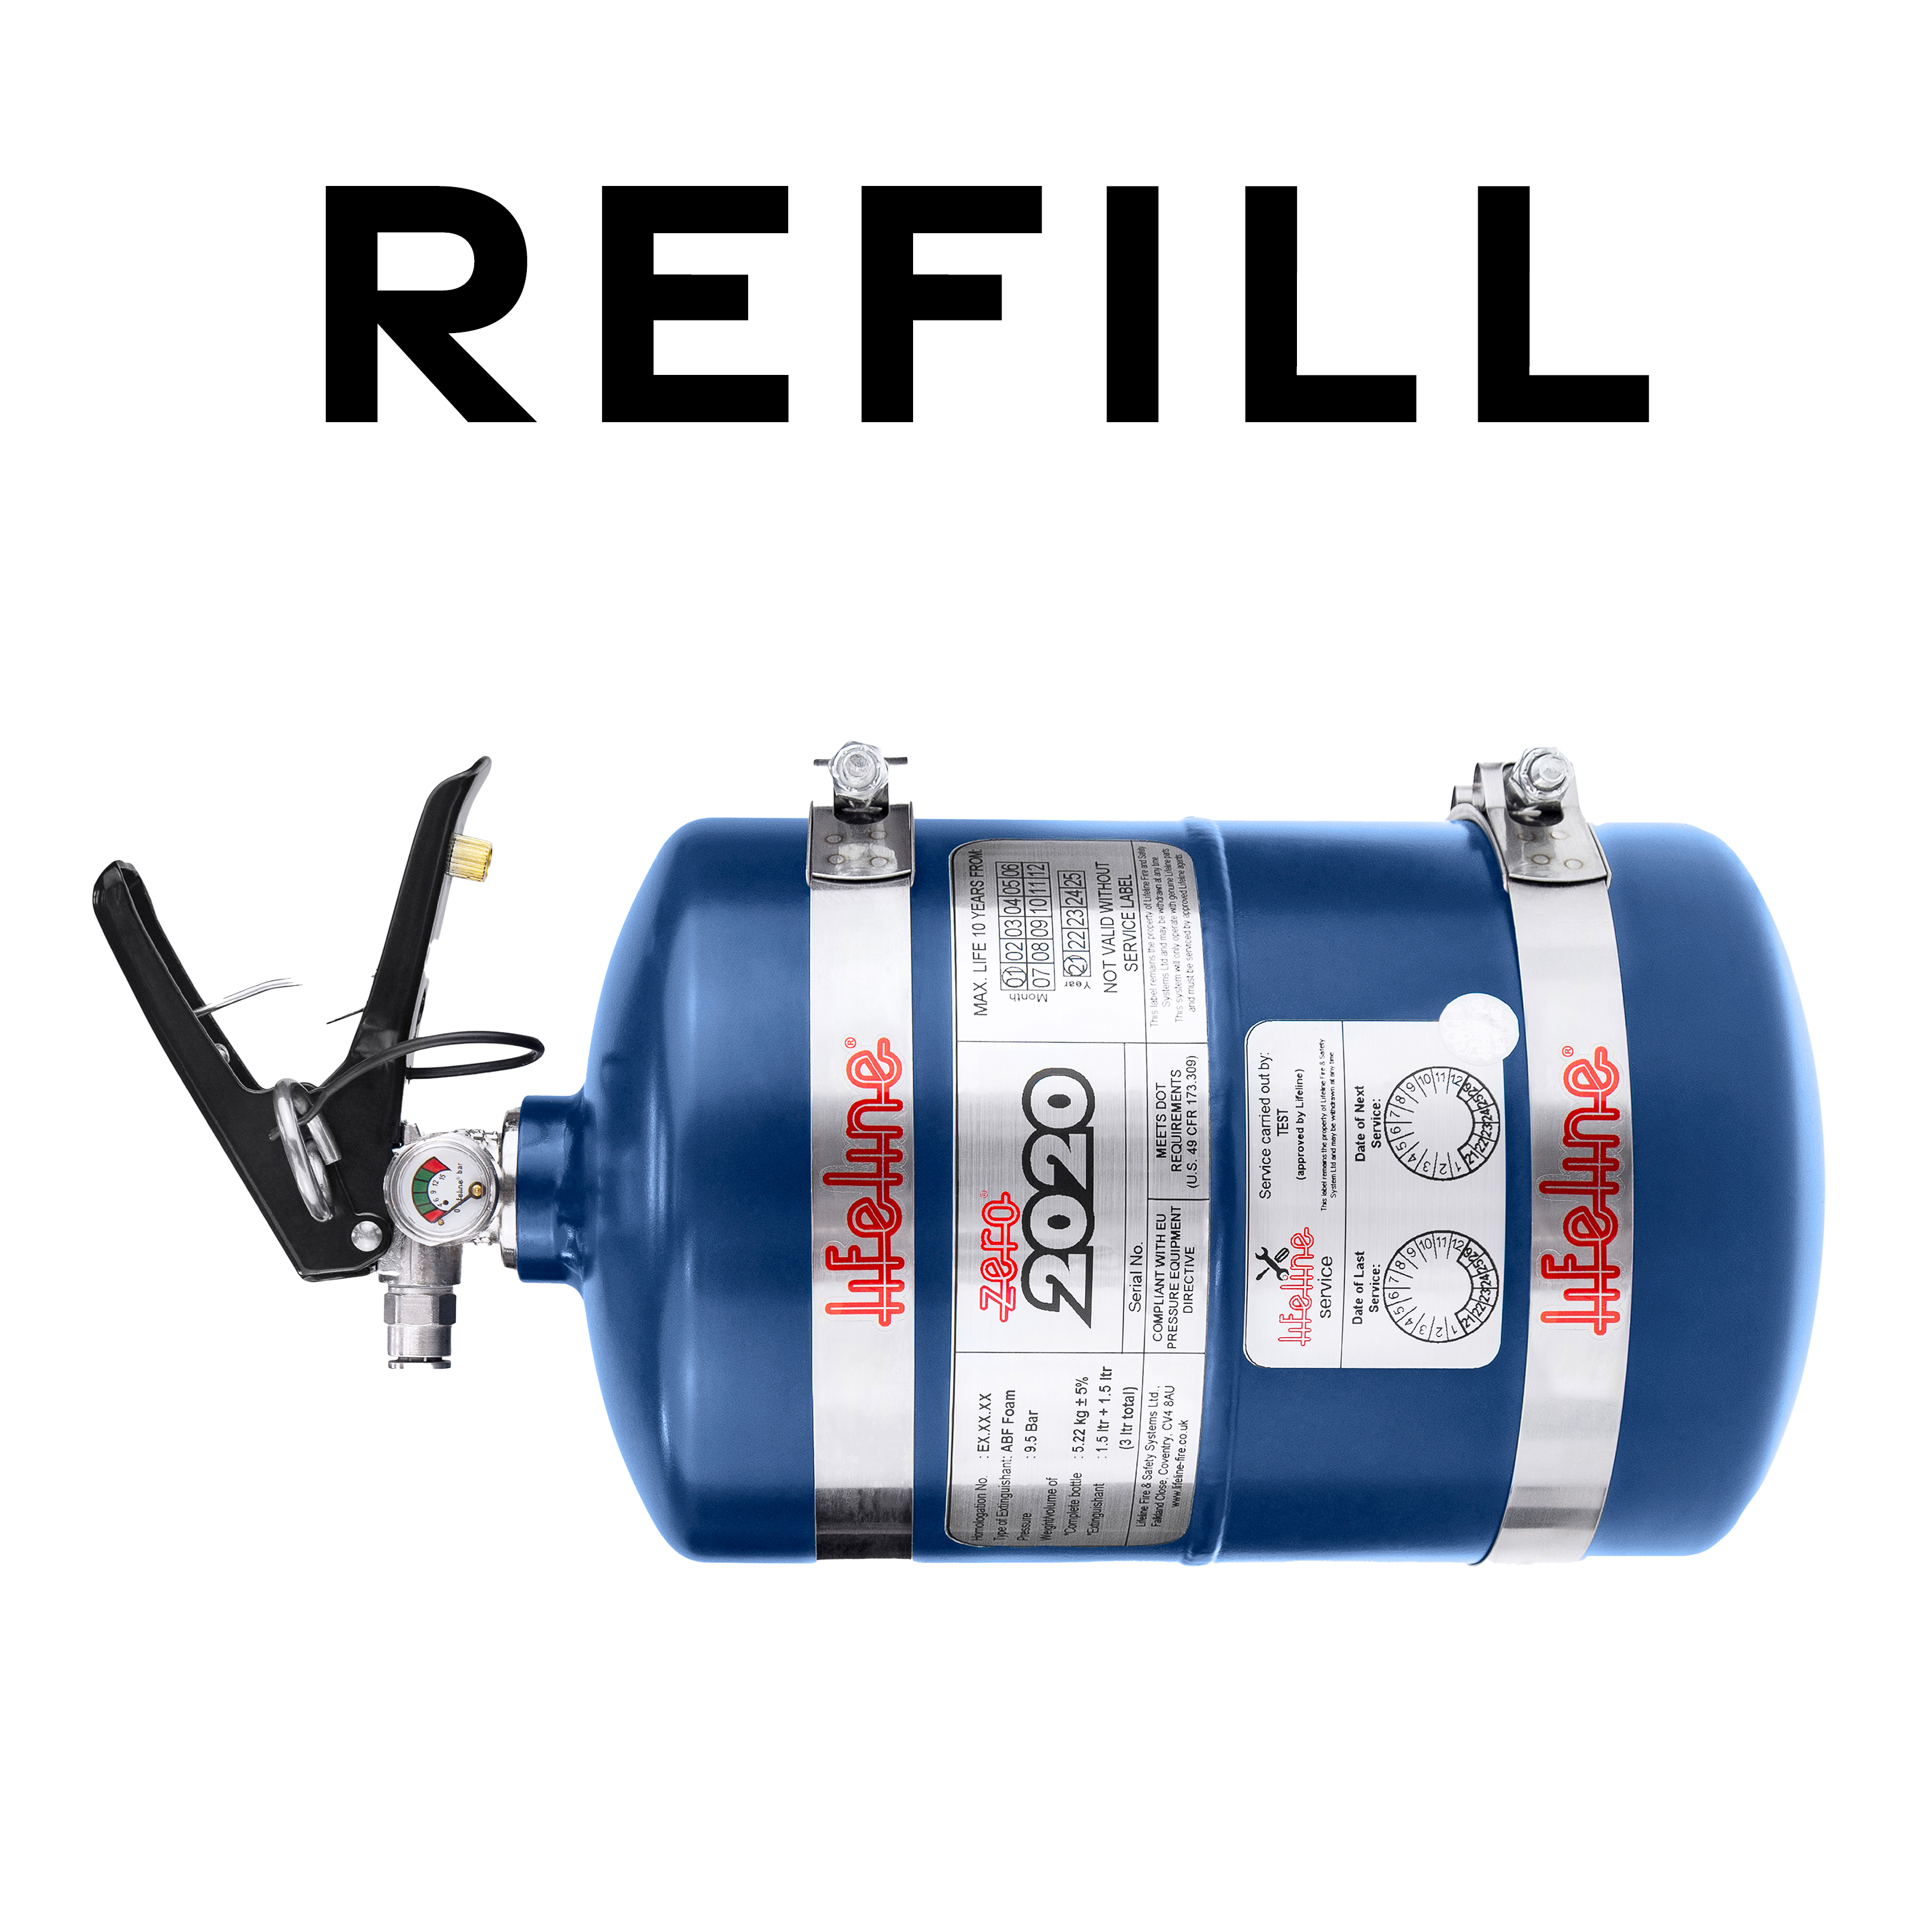 Refill - Lifeline Zero 2020 Fire Marshal 3.0 Litre Mechanical Fire Extinguisher